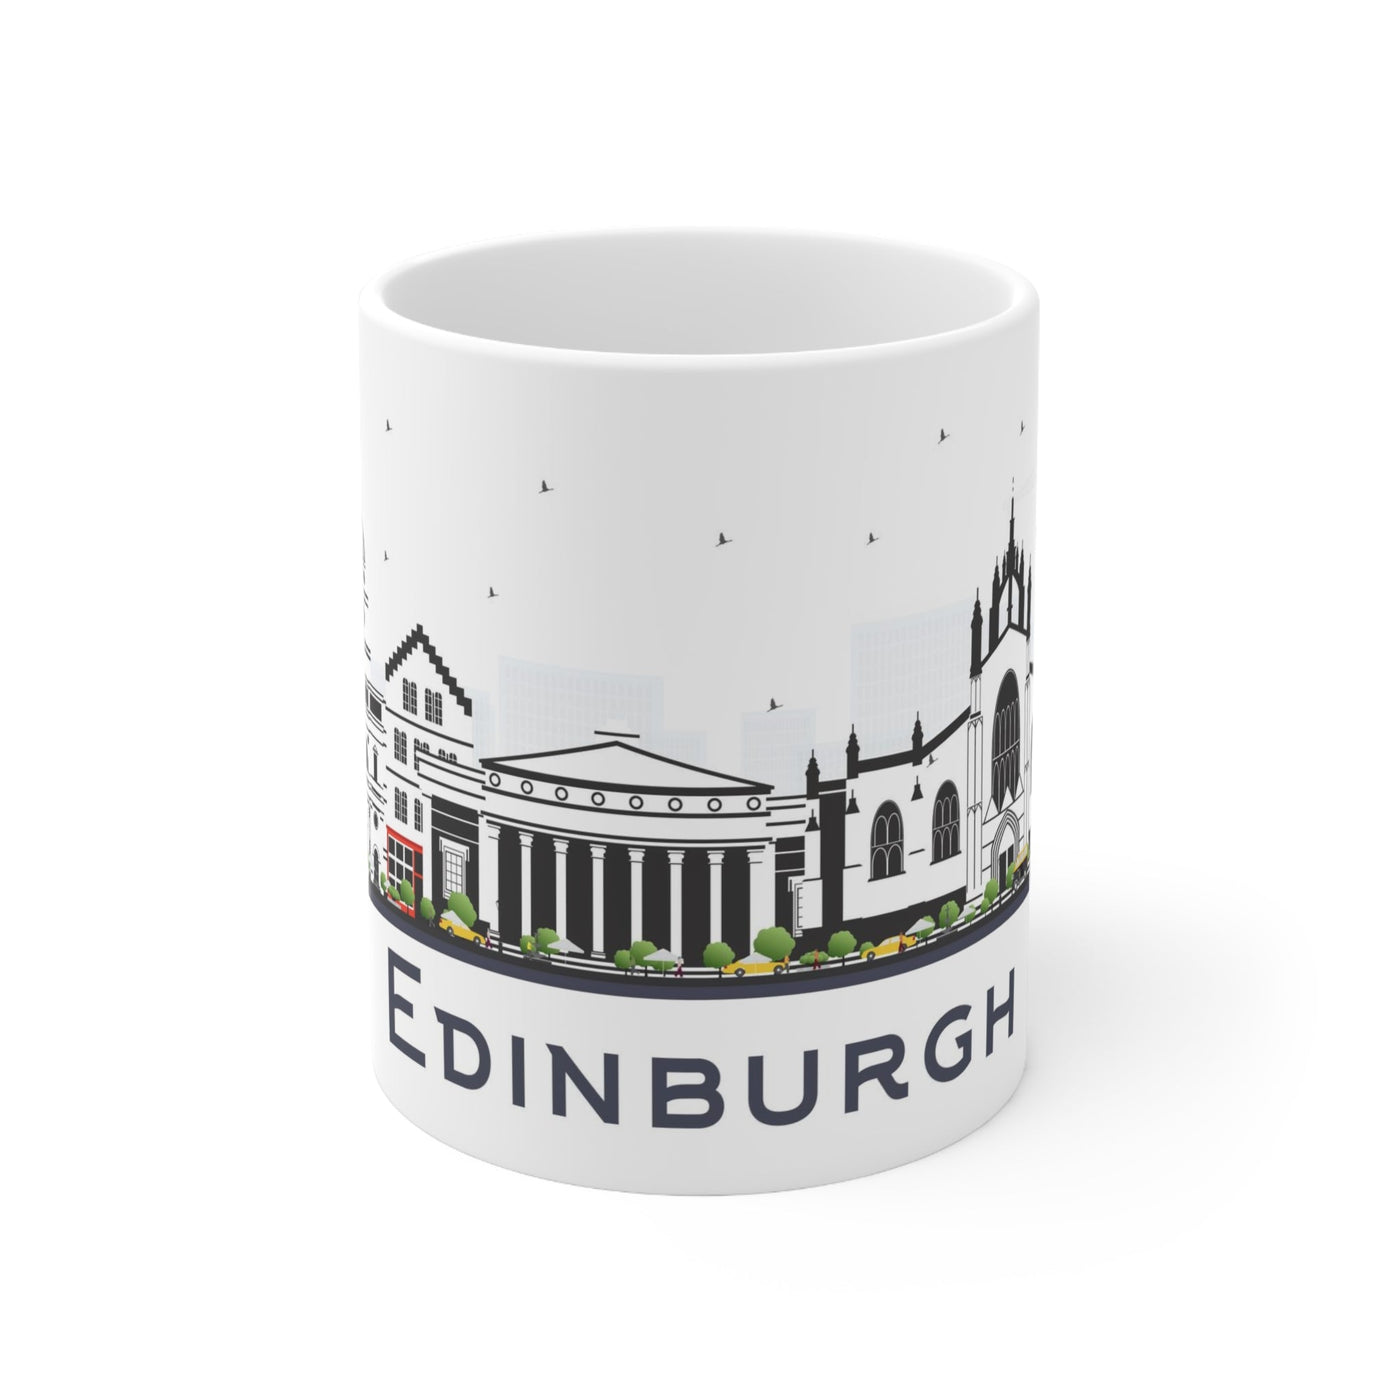 Edinburgh Scotland Coffee Mug - Ezra's Clothing